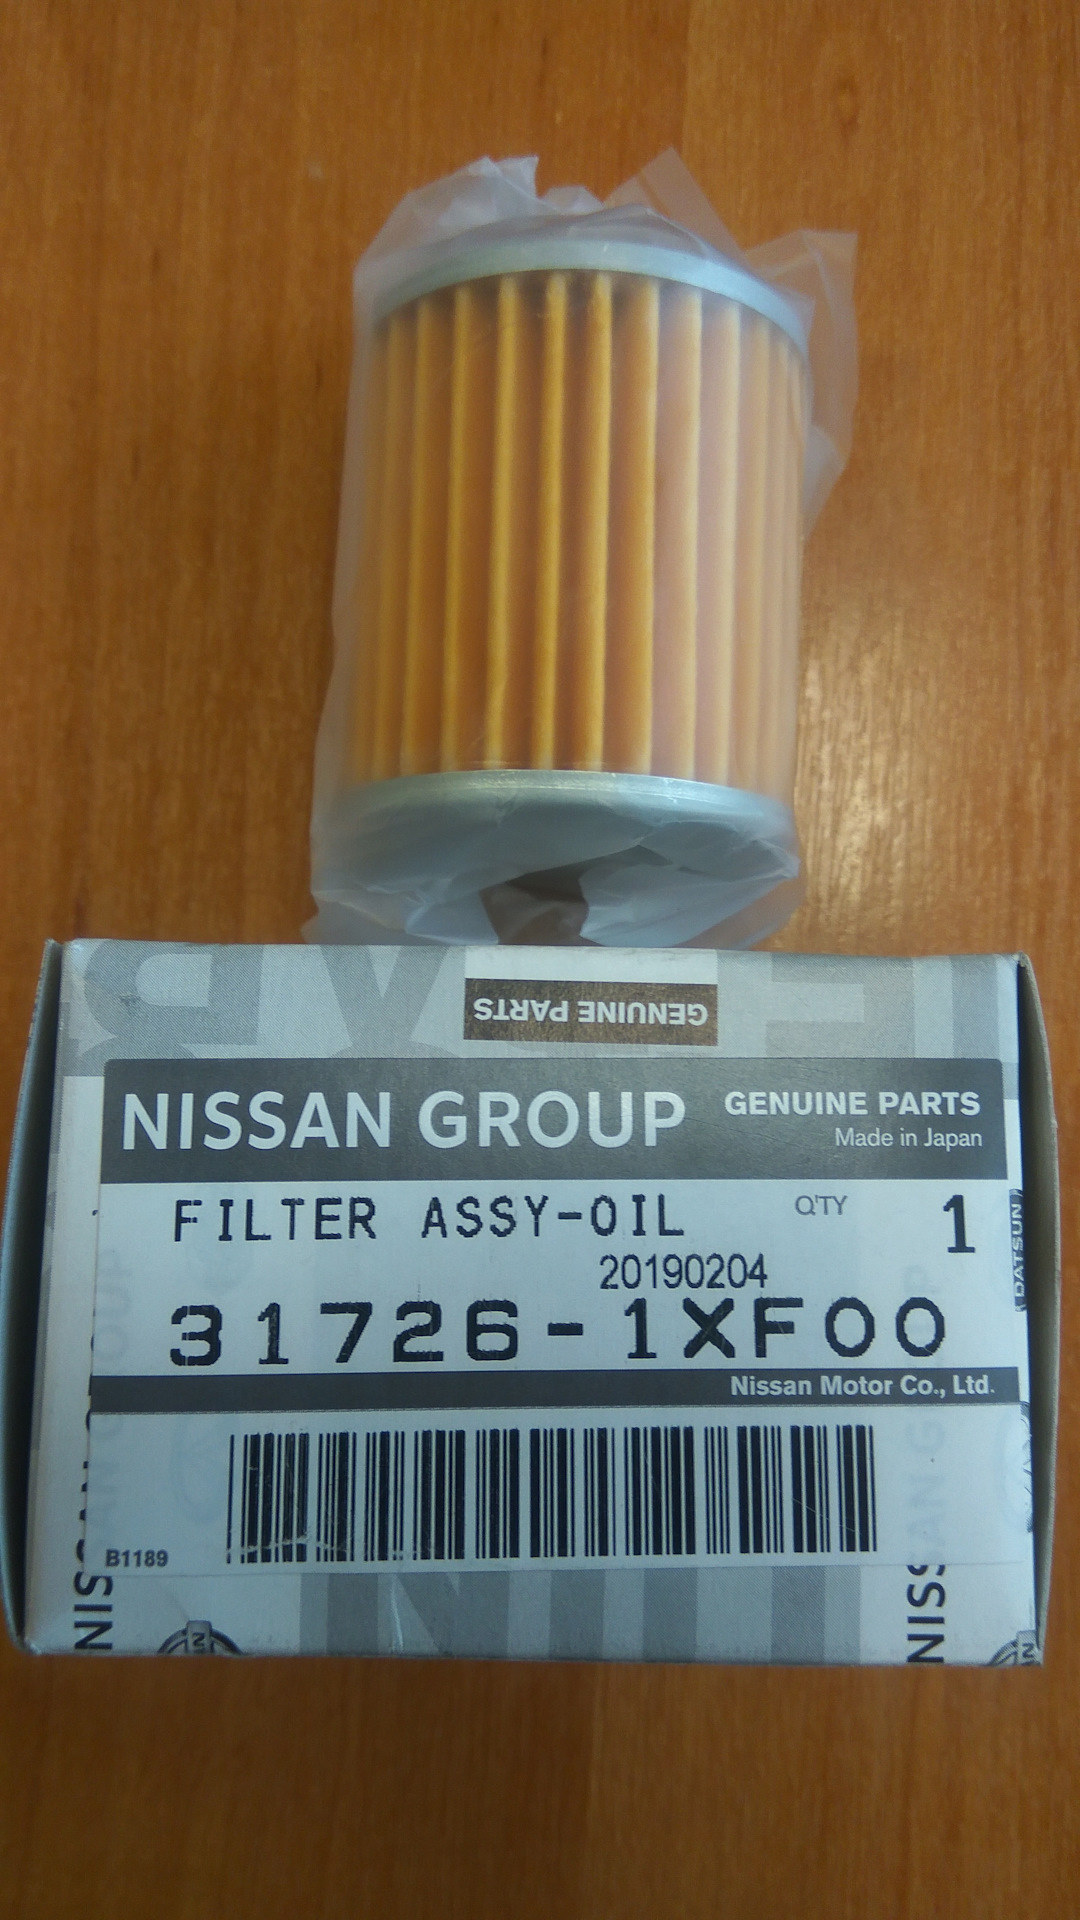 Фильтр тонкой очистки вариатора ниссан. 317261xf00 Nissan. Фильтр CVT Nissan Teana j32 2.5. Фильтр тонкой очистки вариатора Ниссан Теана j32 2.5. Фильтр вариатора Теана j32.